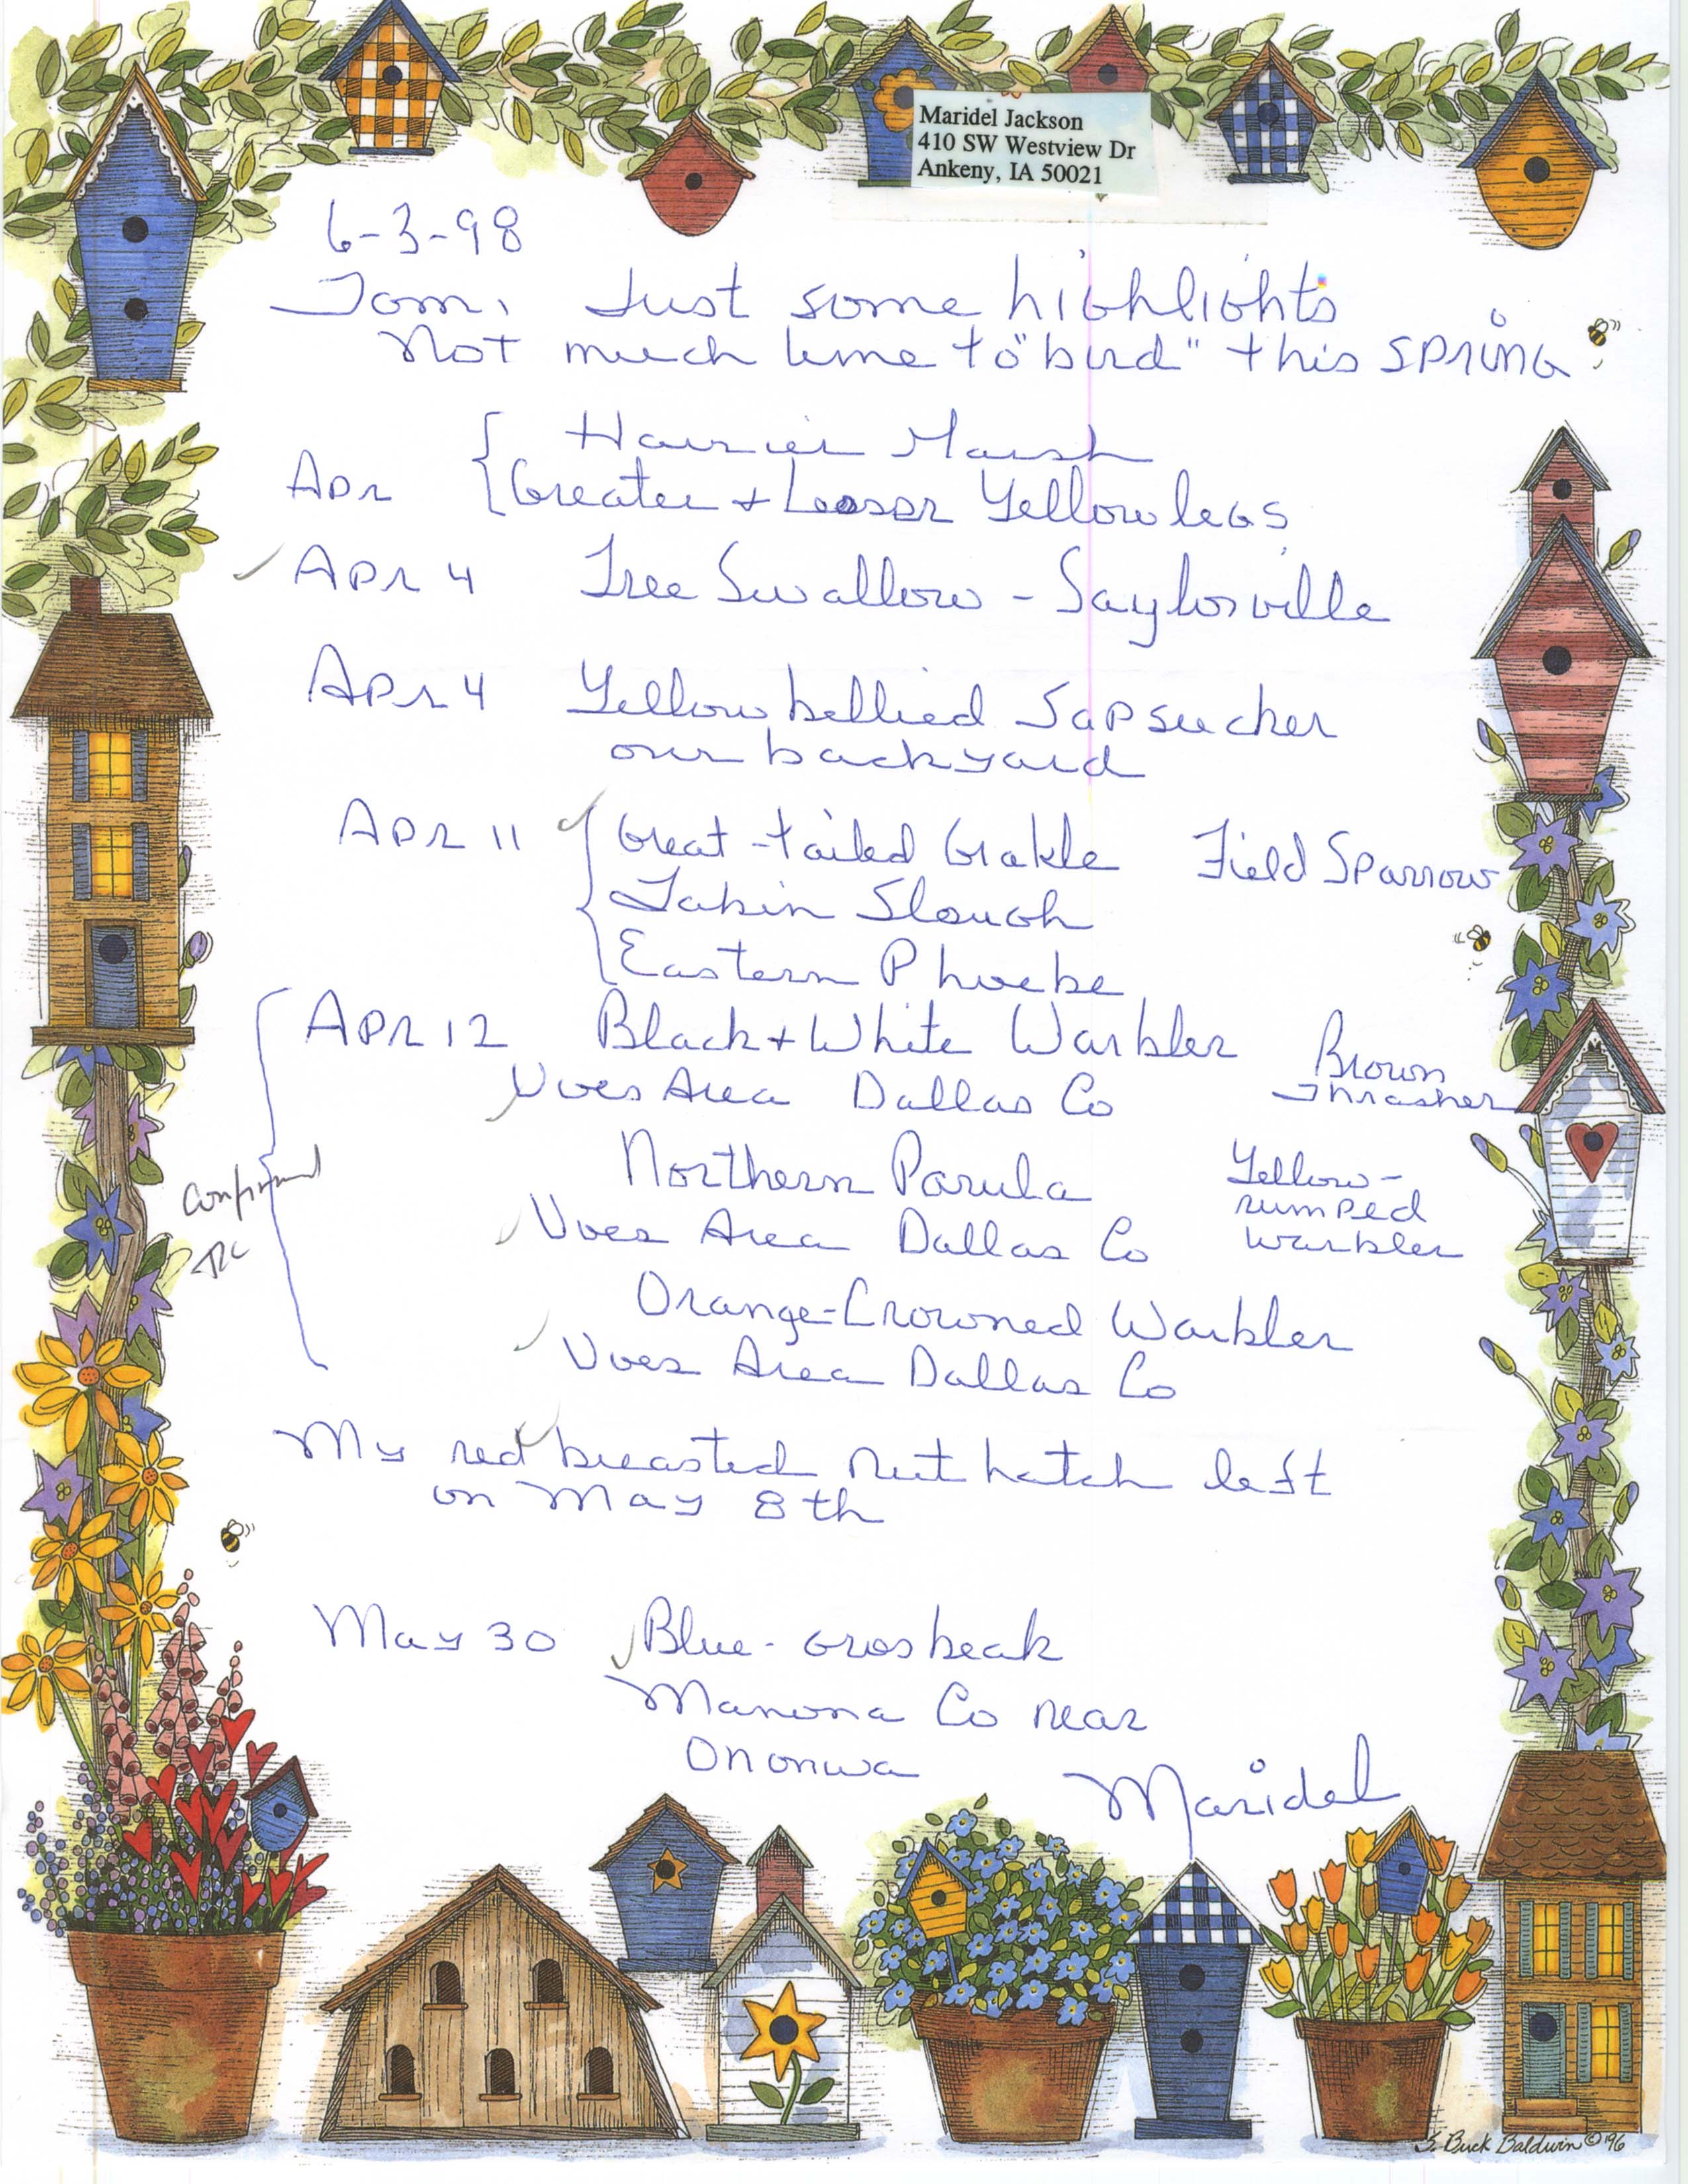 Maridel Jackson letter to Thomas Kent regarding bird highlights, June 3, 1998